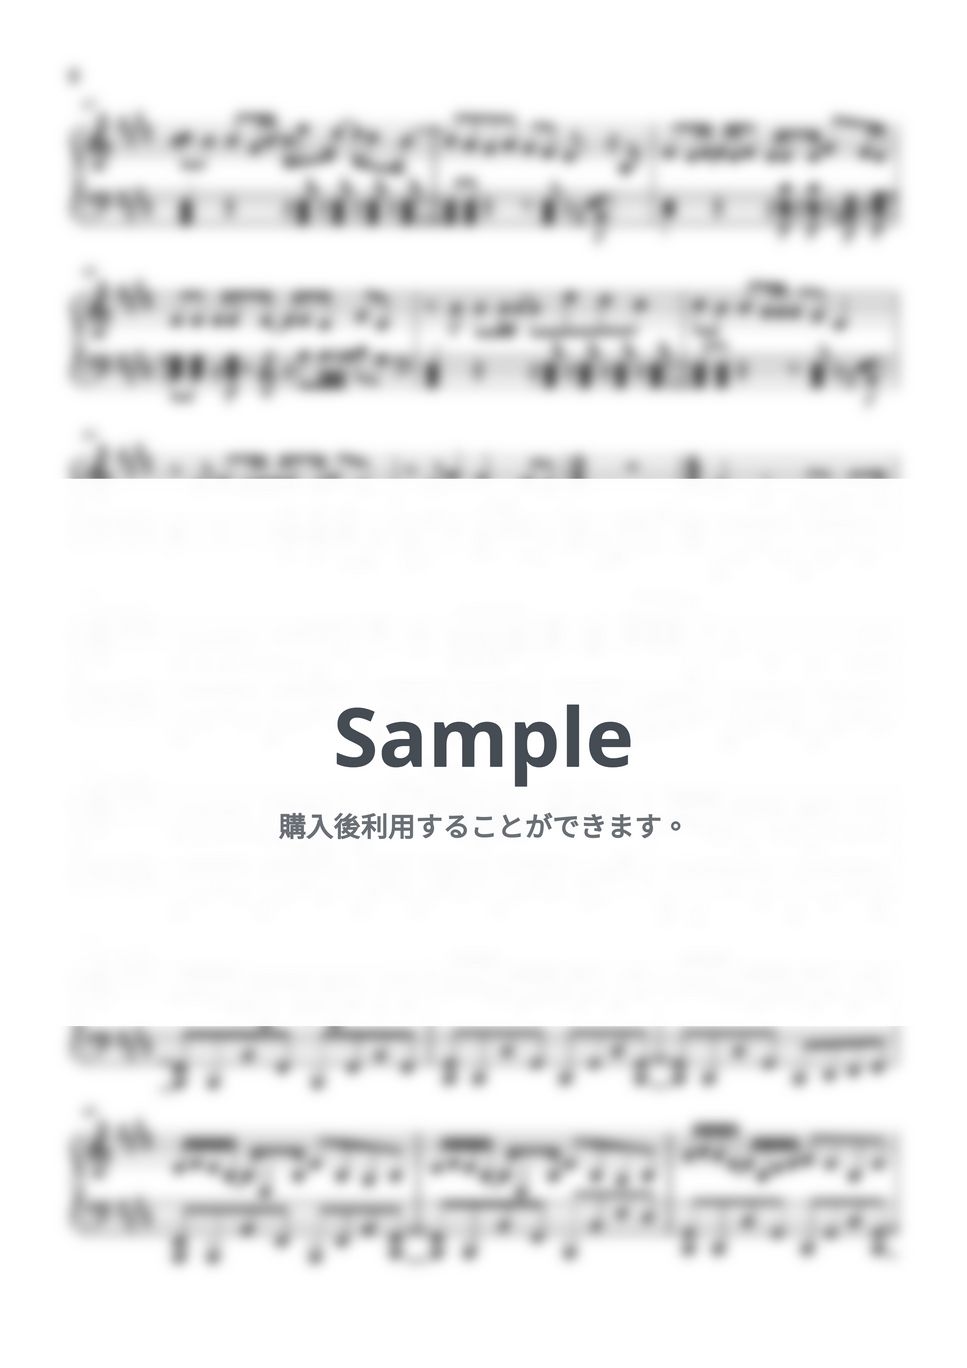 Mrs. GREEN APPLE - Tsuki to Anemone (intermediate, piano) by Mopianic